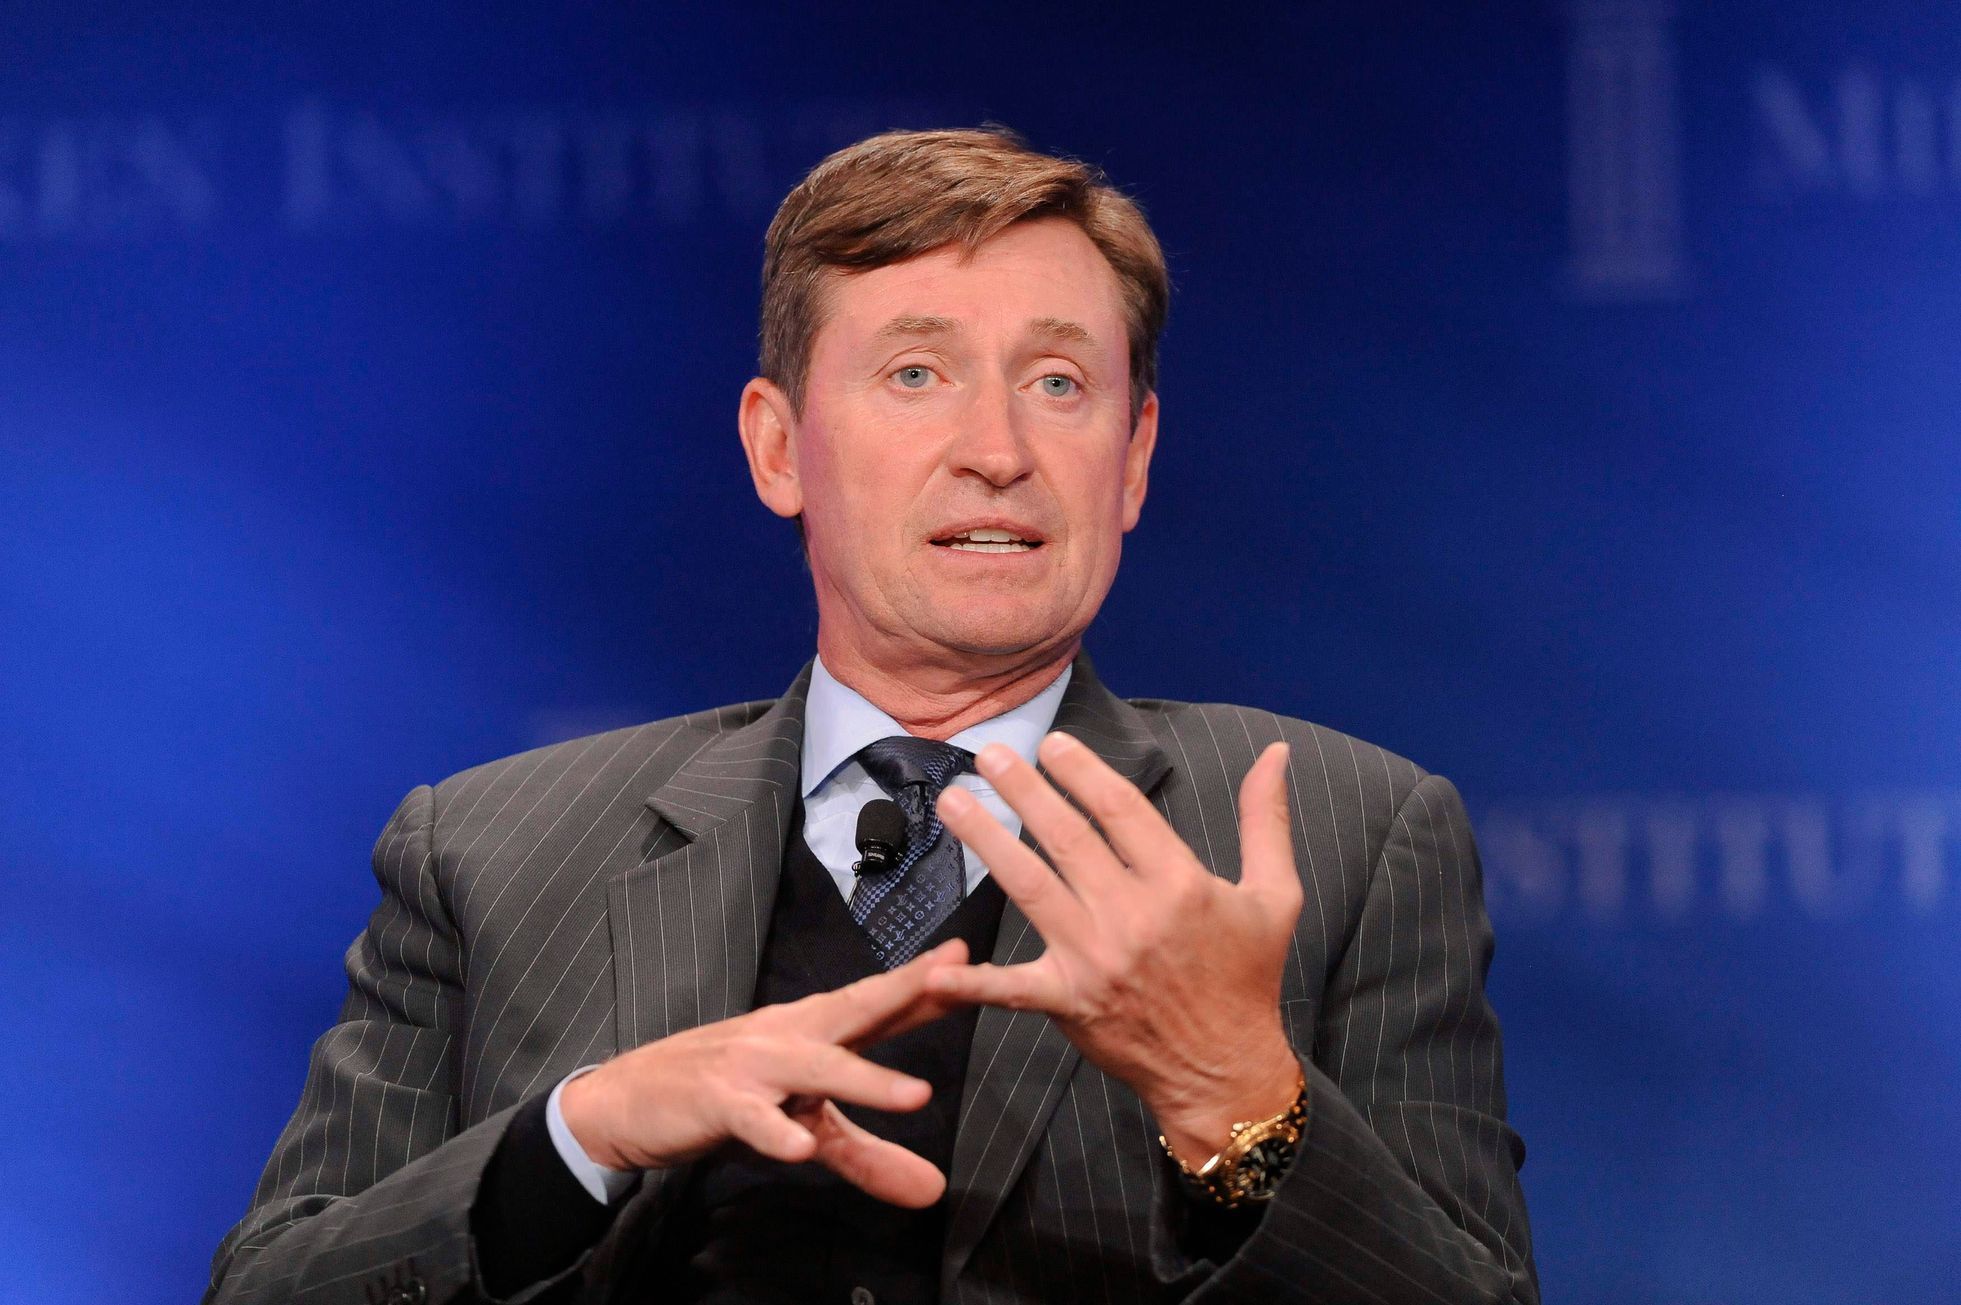 Hokej, NHL: Wayne Gretzky